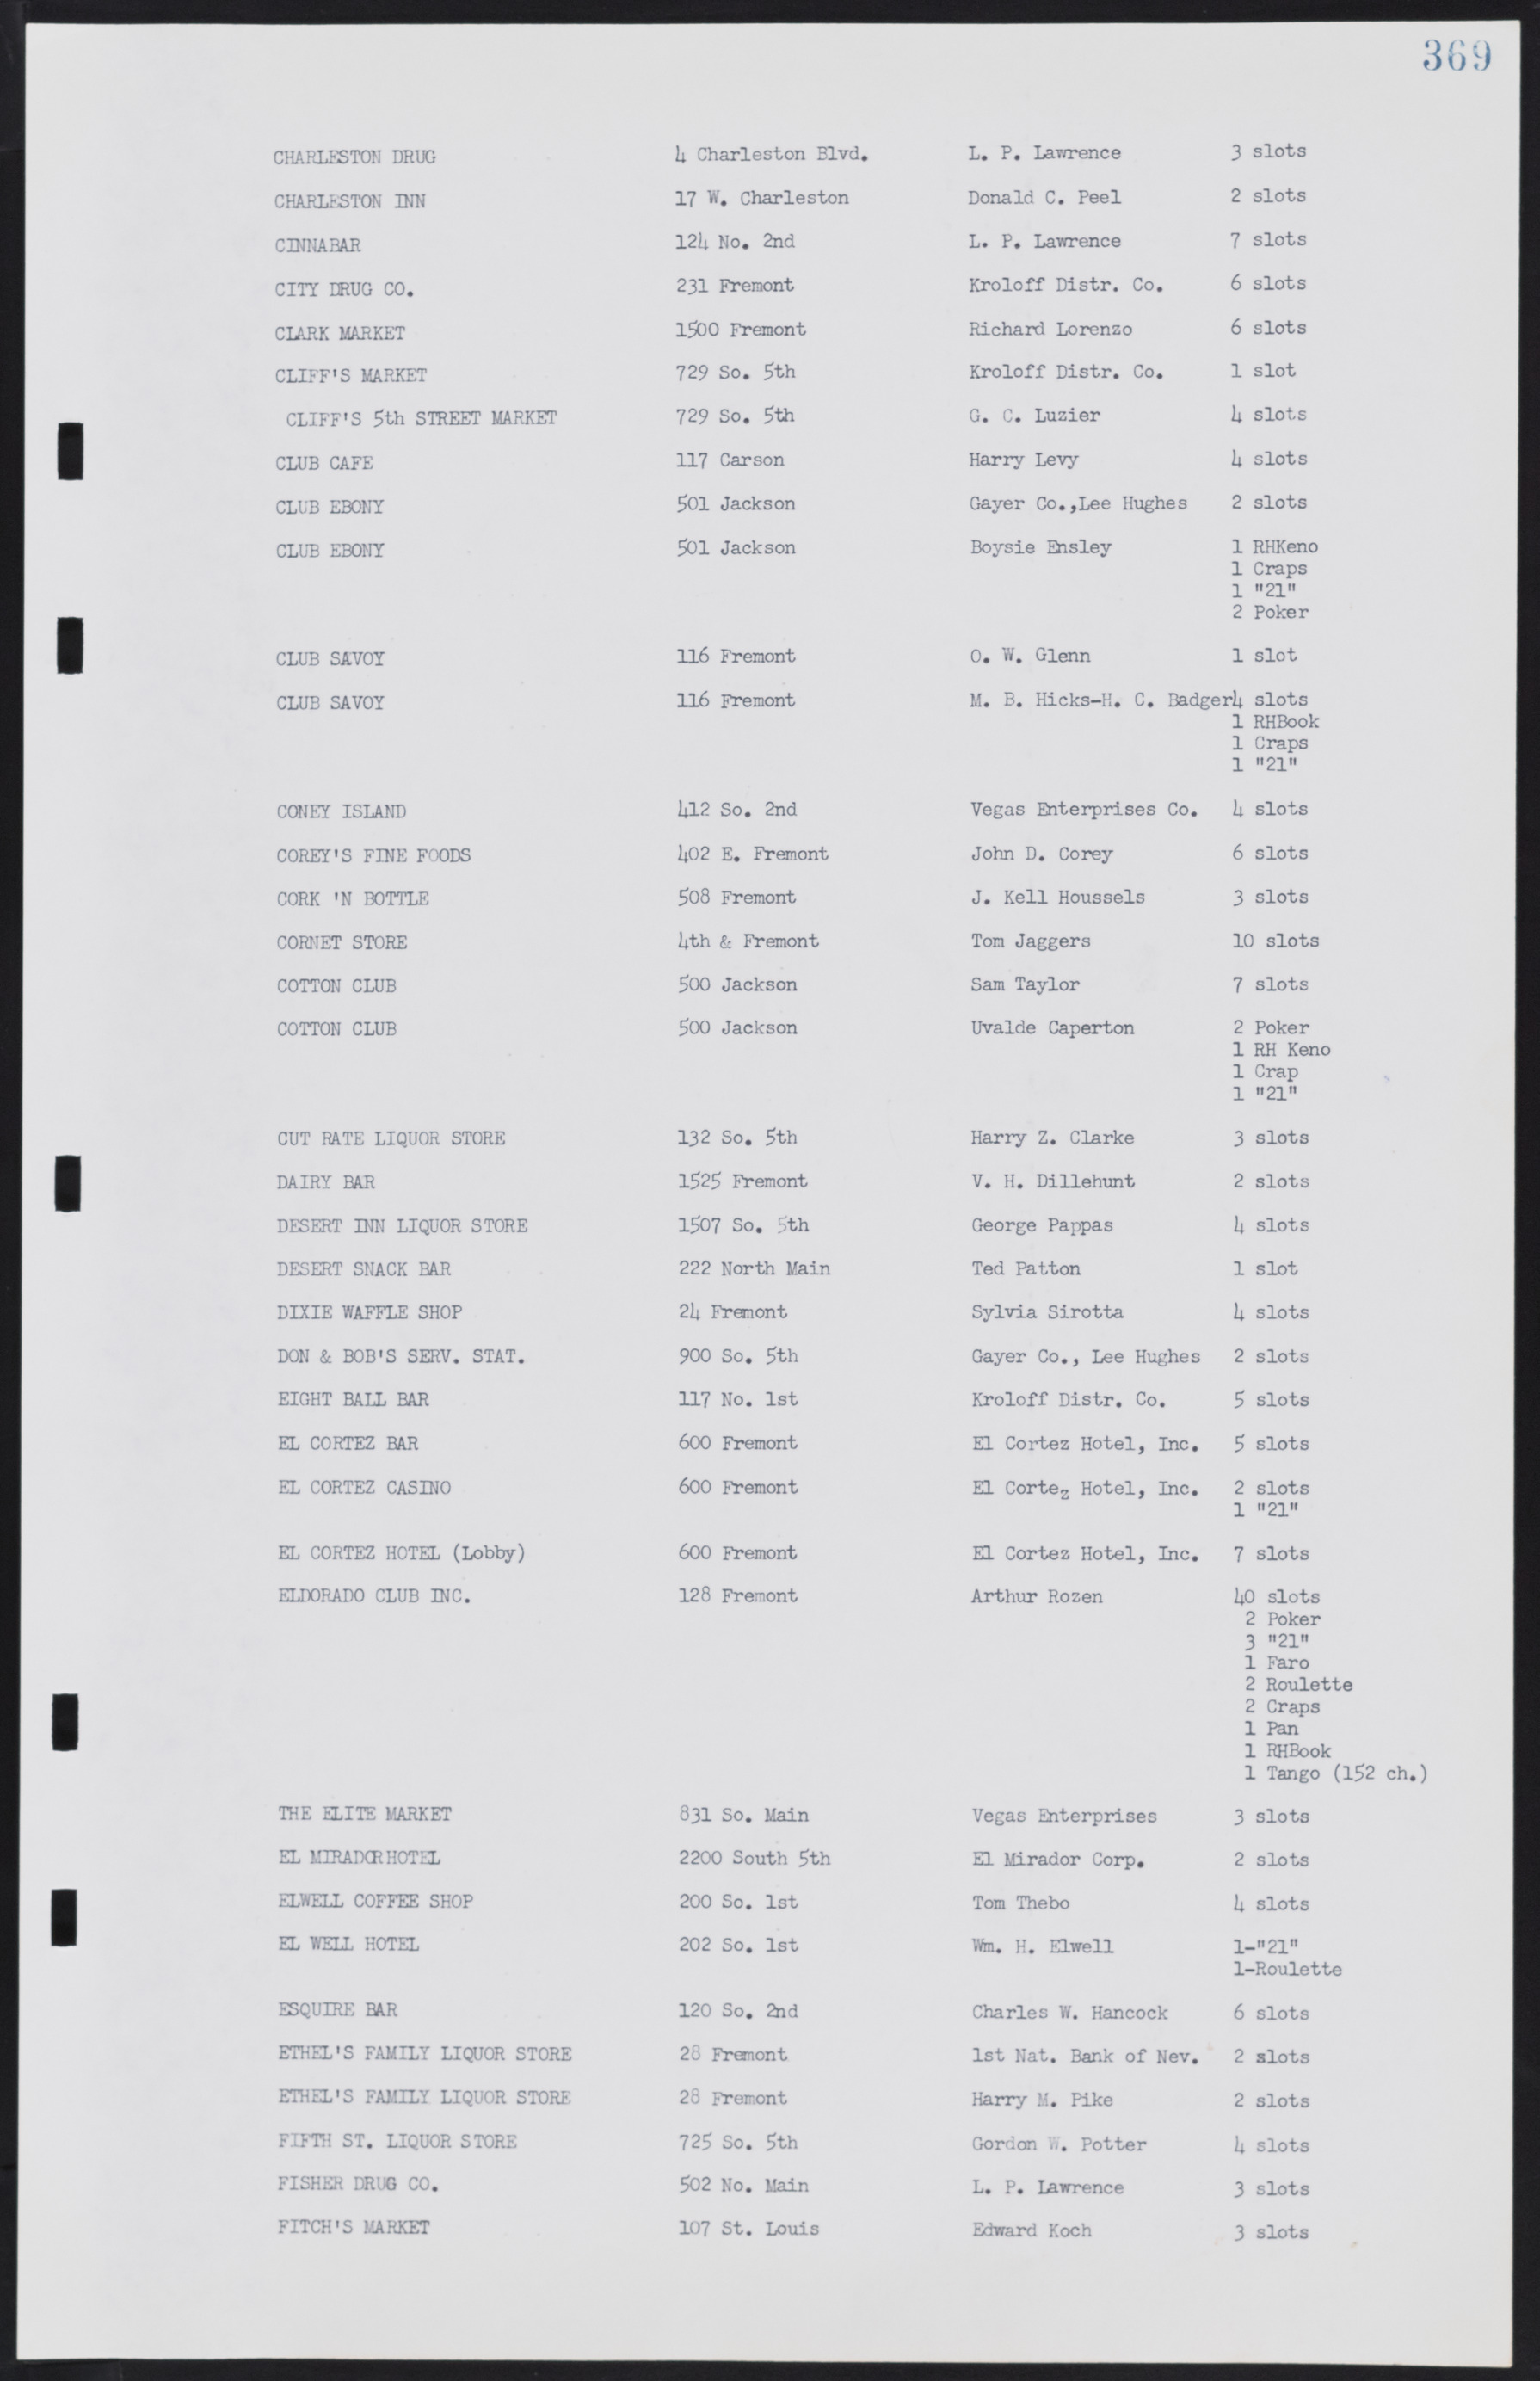 Las Vegas City Commission Minutes, January 7, 1947 to October 26, 1949, lvc000006-399